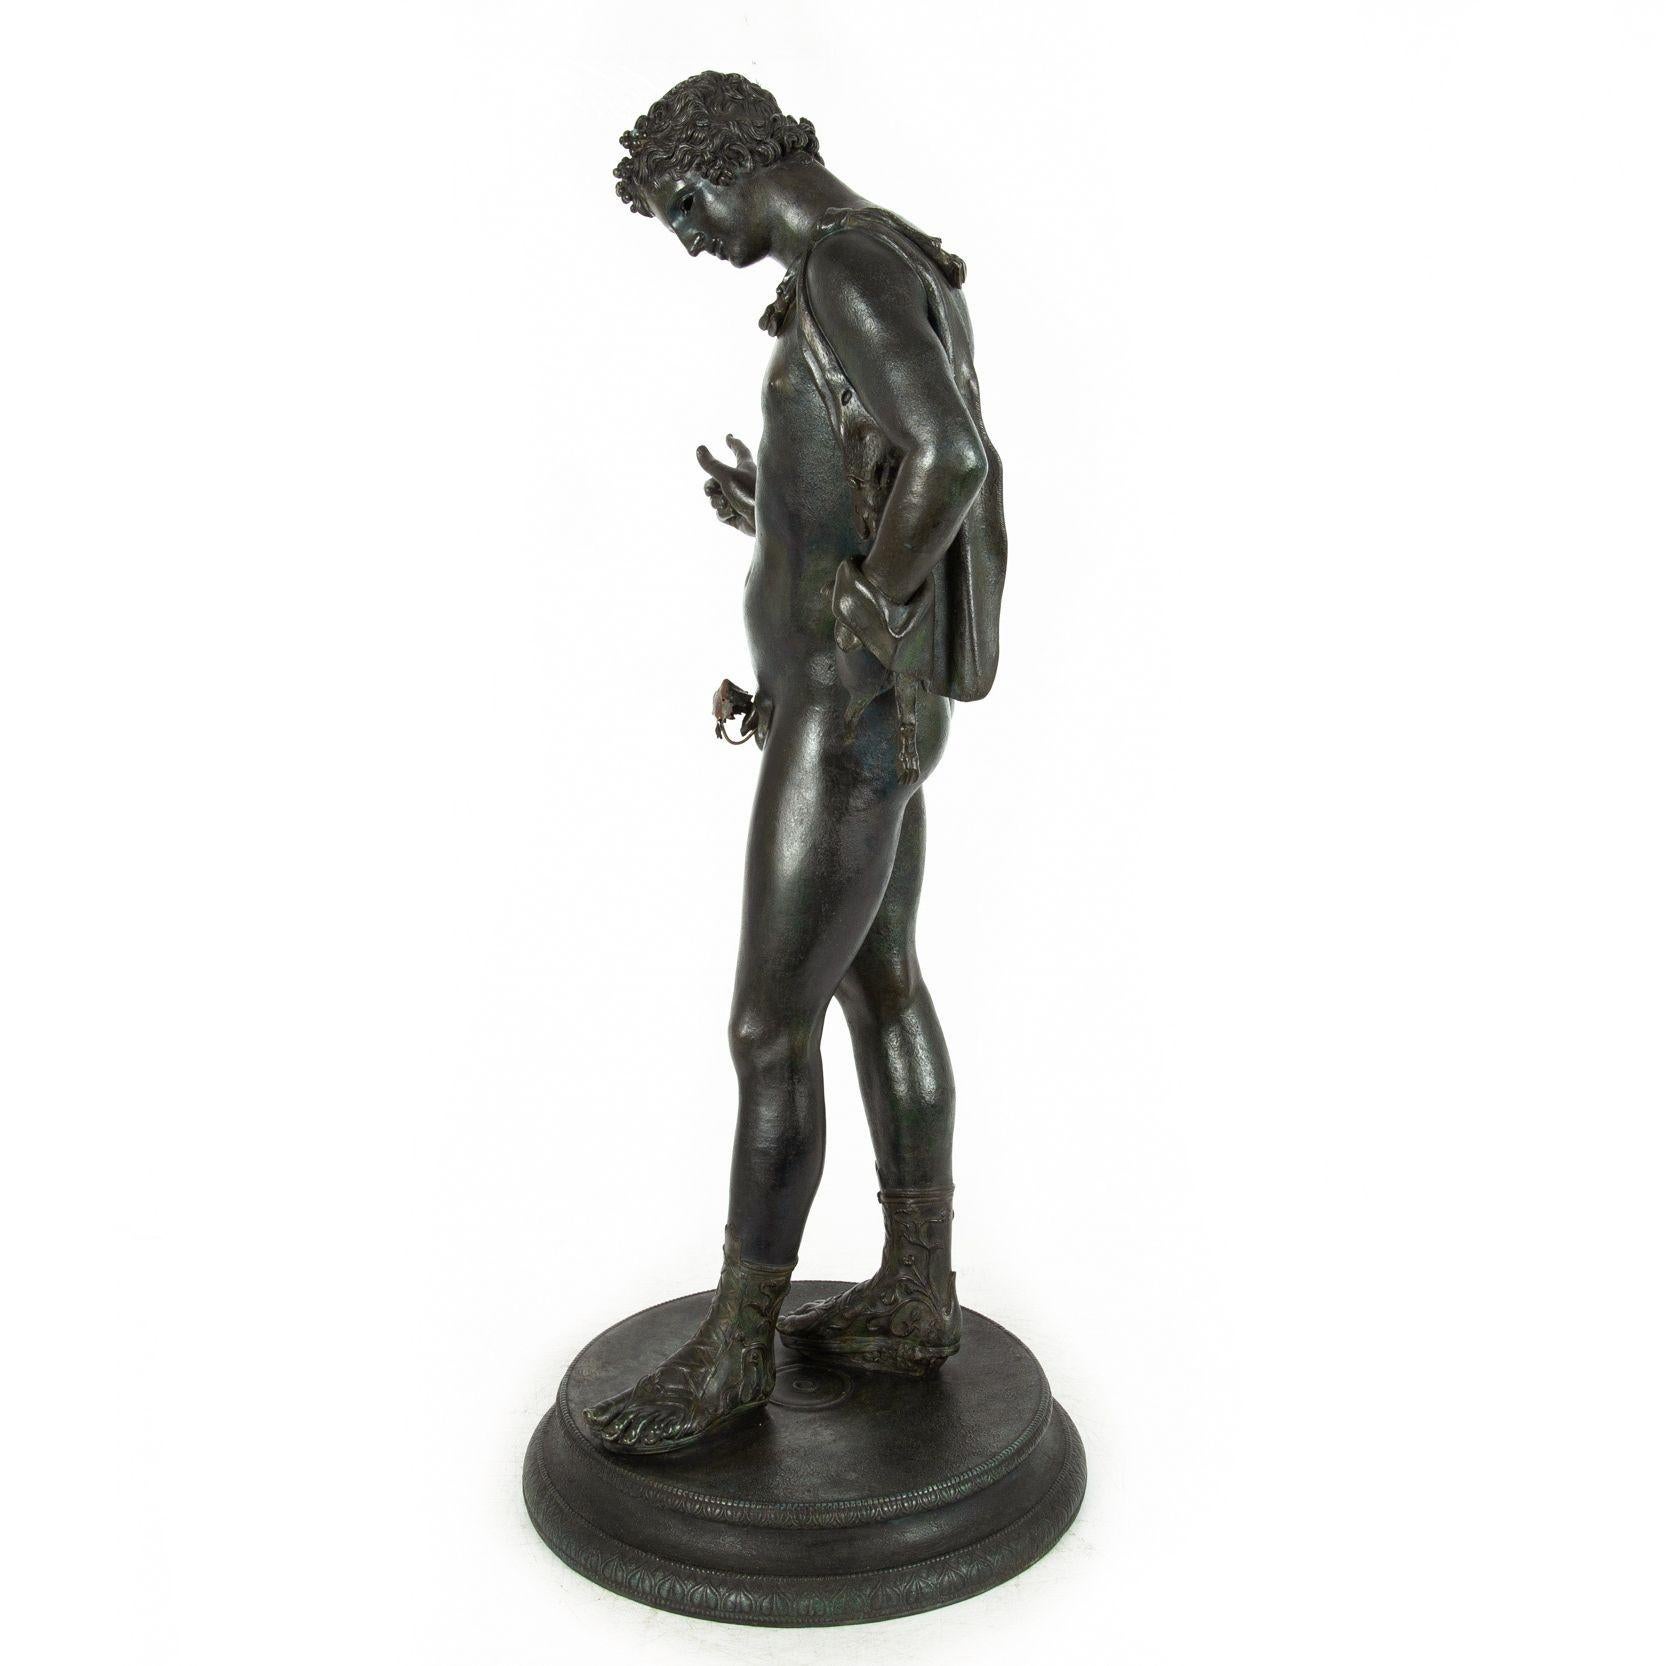 Italian Grand Tour Bronze Sculpture Statue “Narcissus” after Antiquity 1